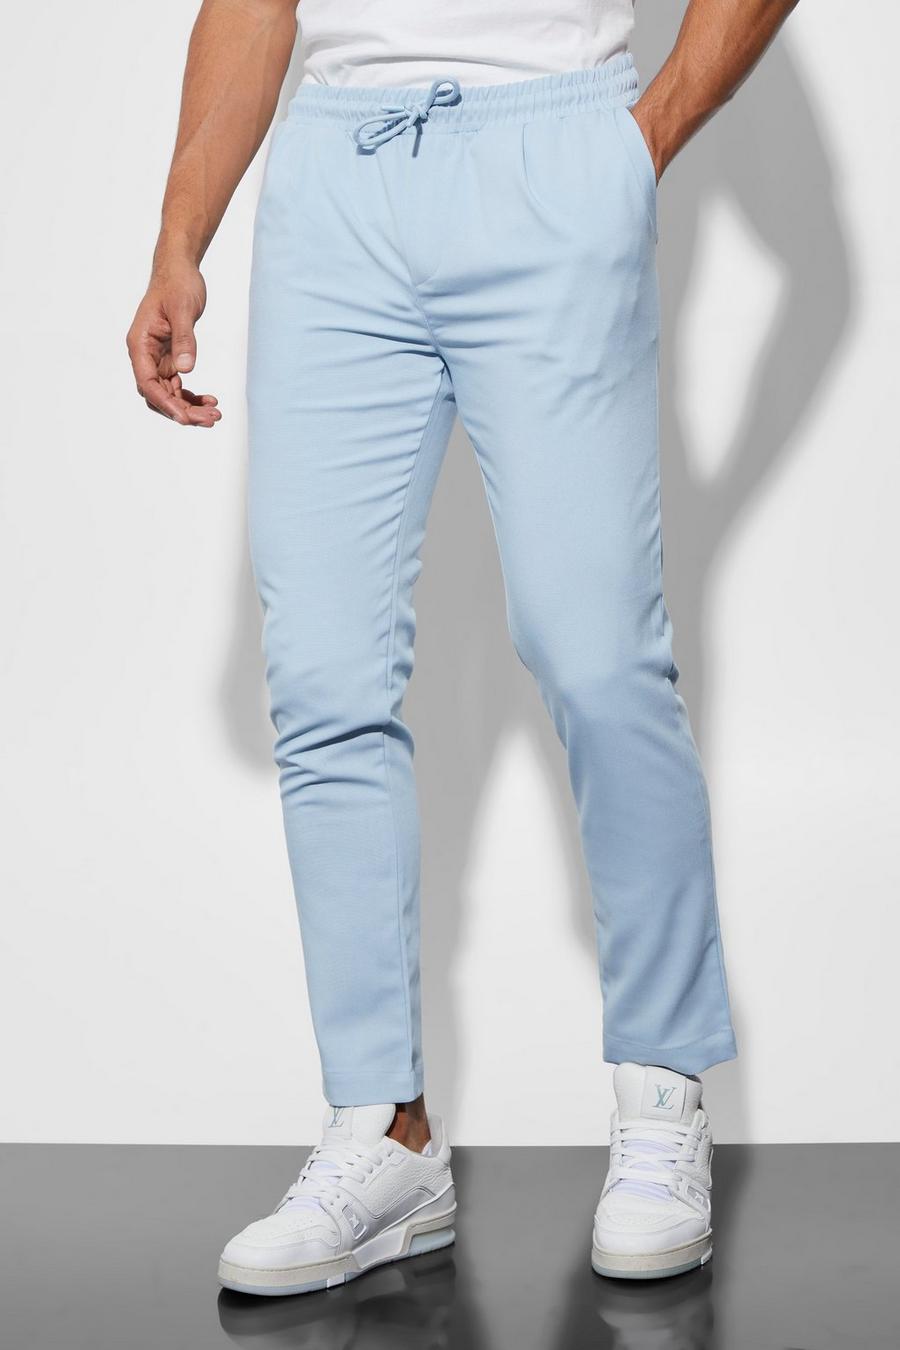 Pantalon court skinny élastique, Light blue